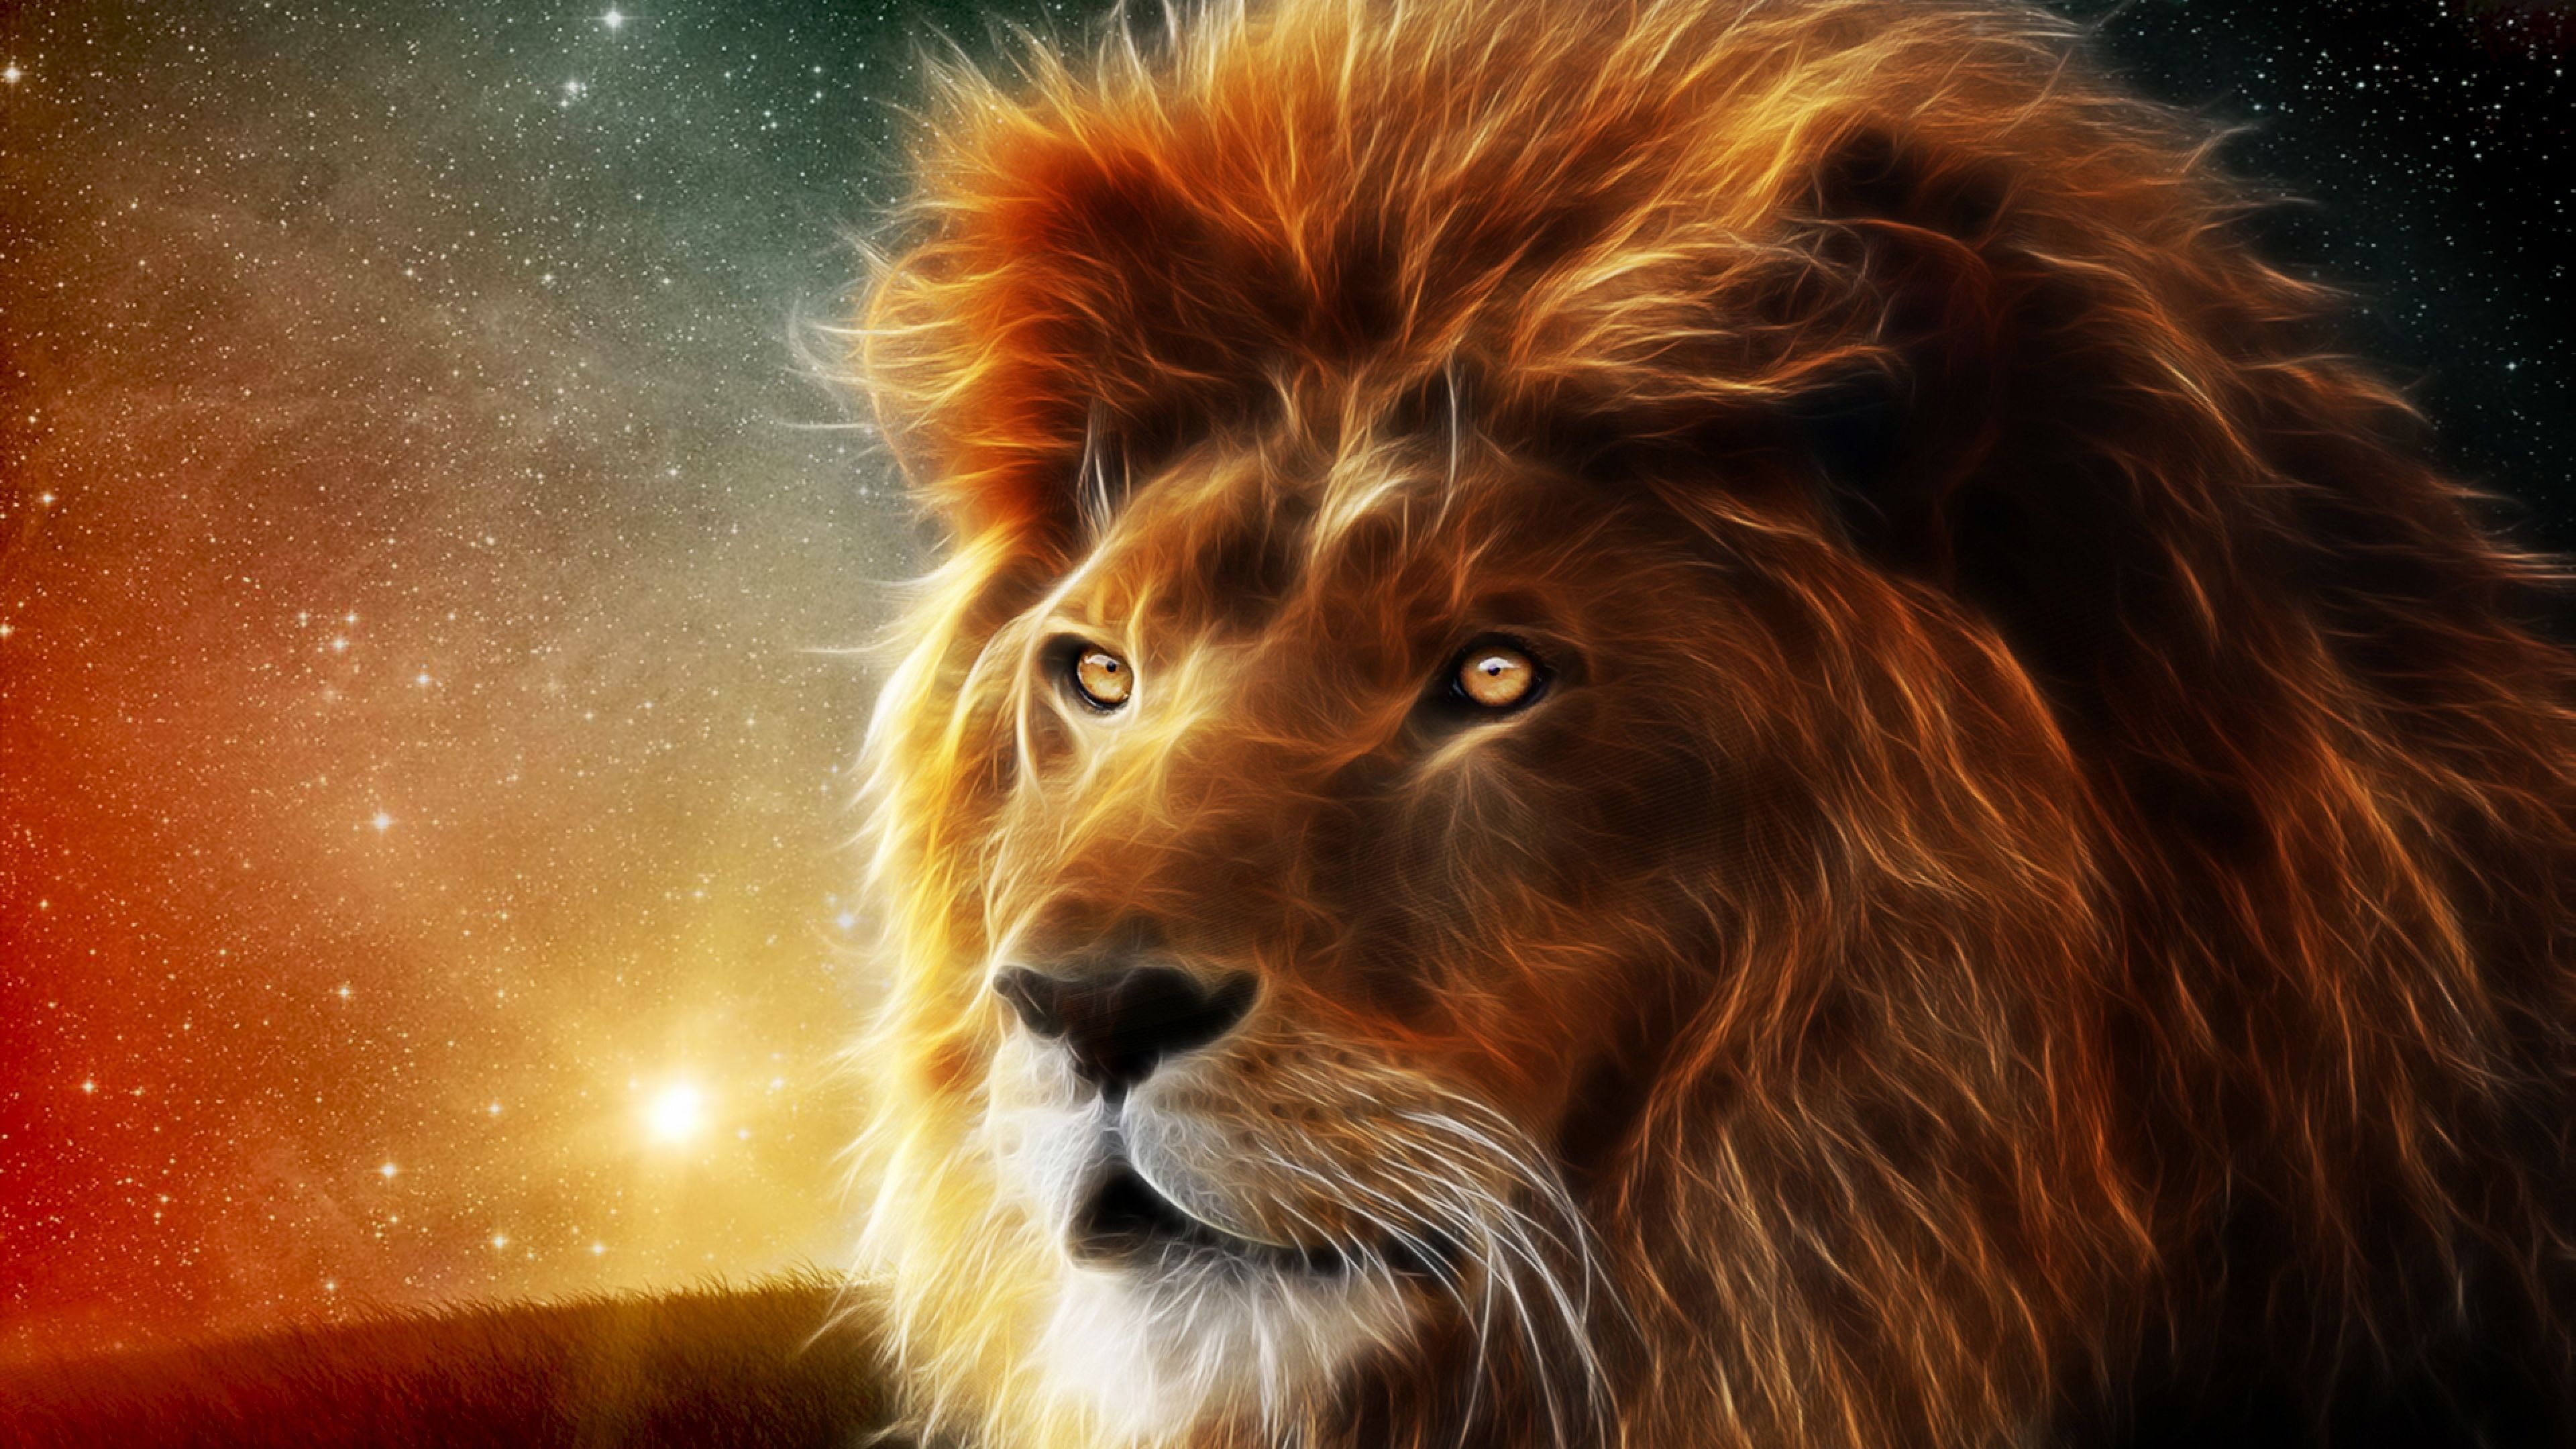 Download Wallpaper 3840x2160 Lion, Face, Mane, King of beasts ...